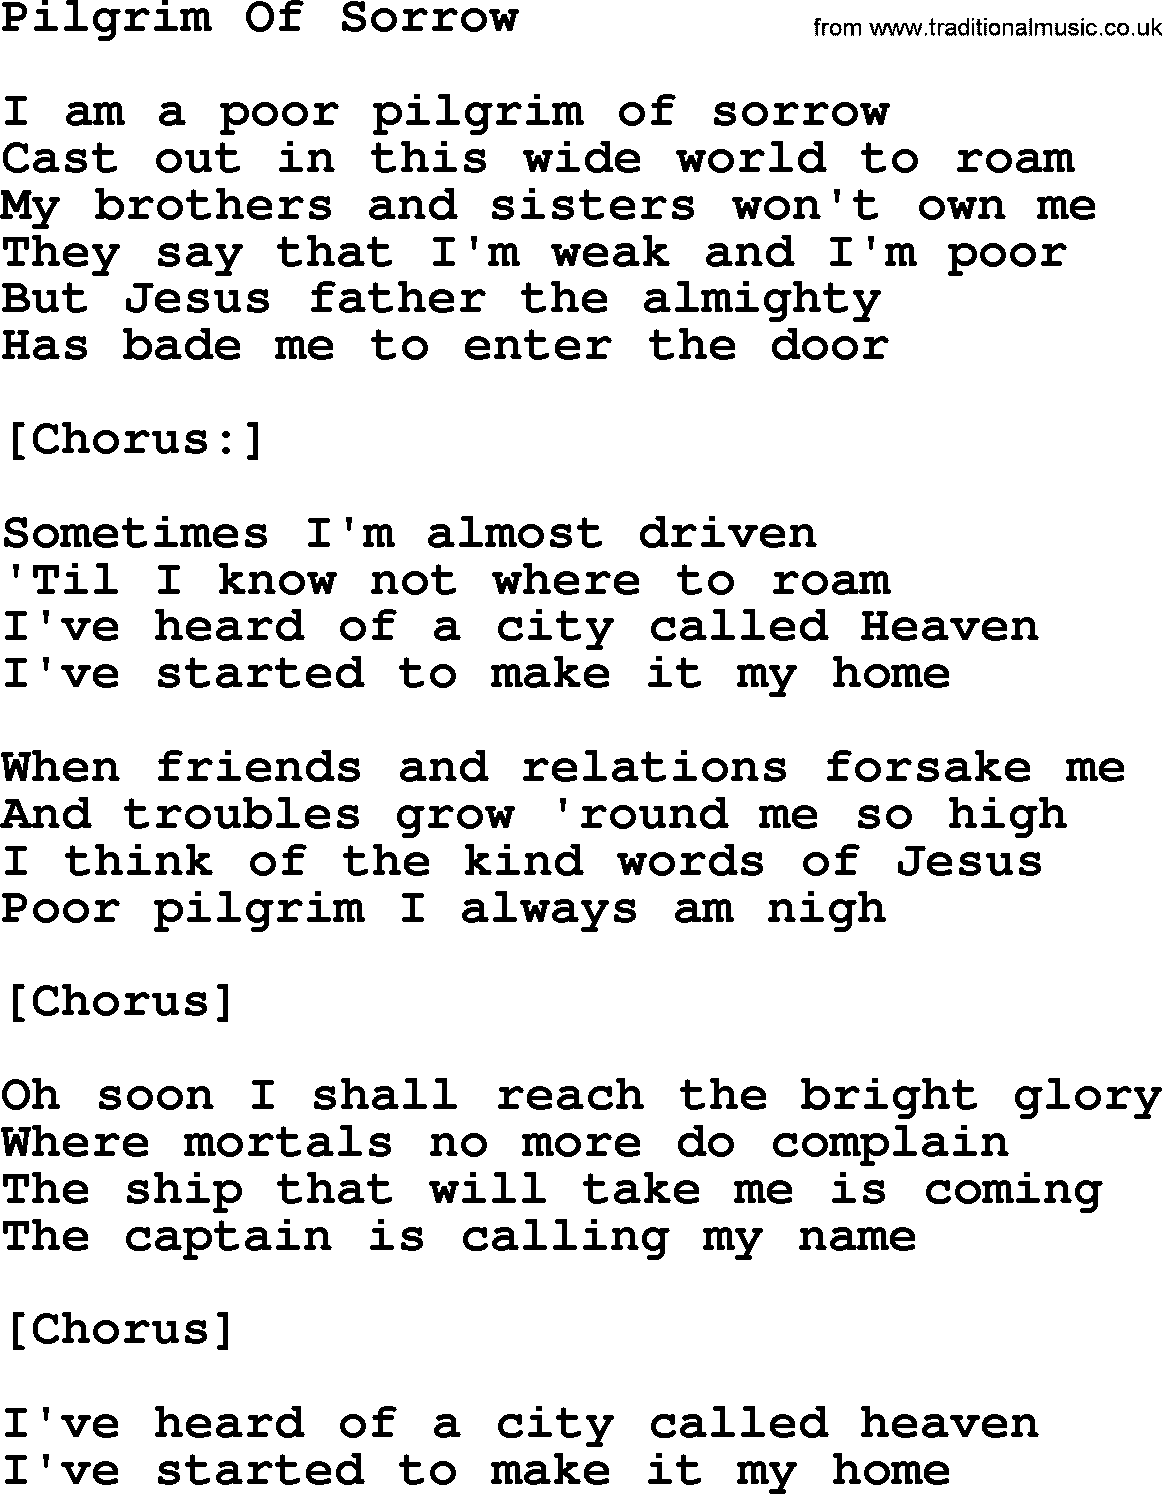 Joan Baez song Pilgrim Of Sorrow, lyrics